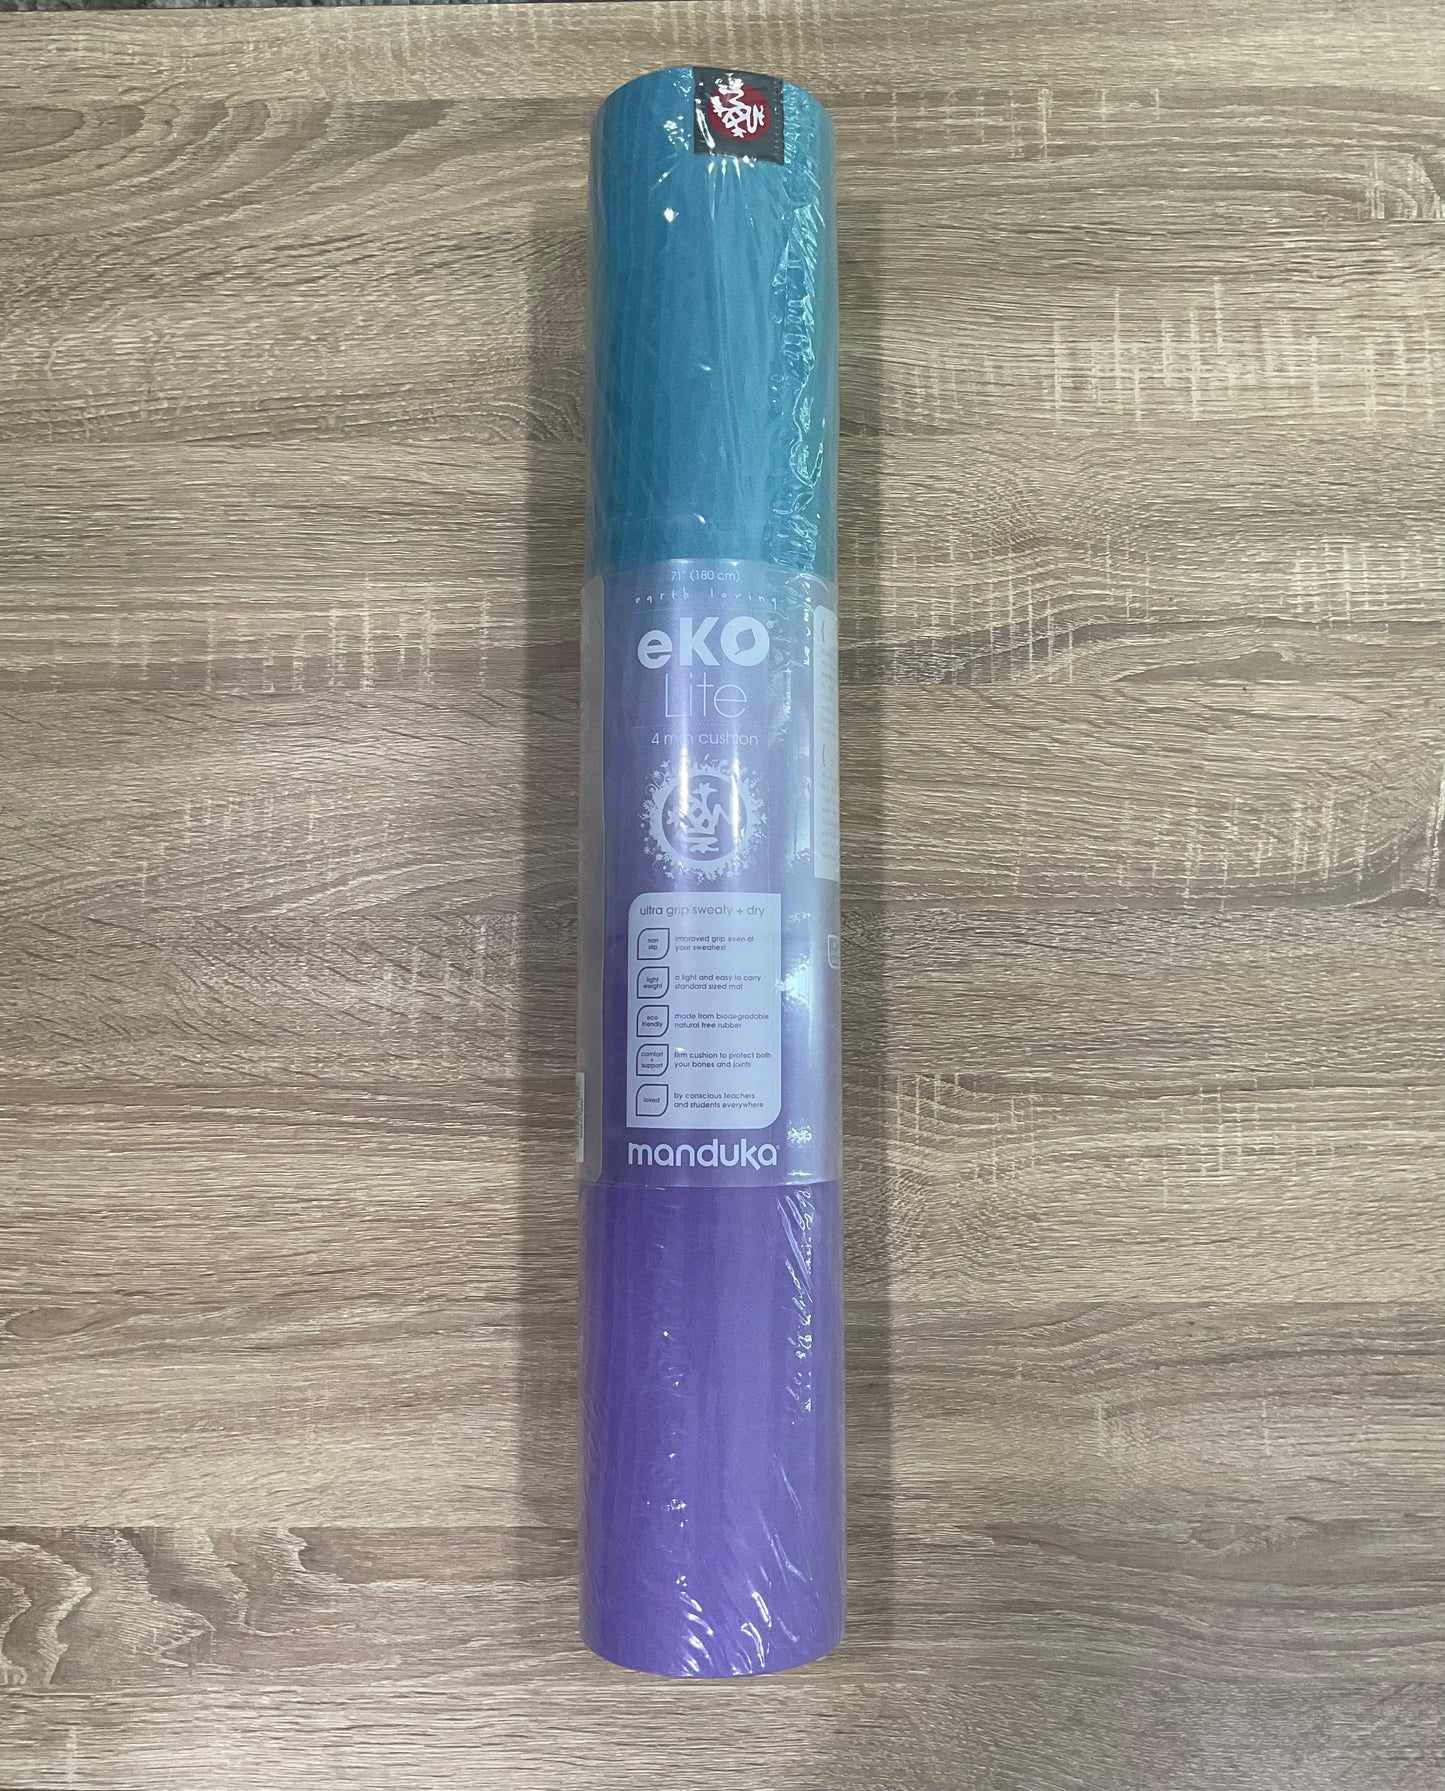 Manduka Eko® Lite Yoga Mat 4mm - Aqua Stripe